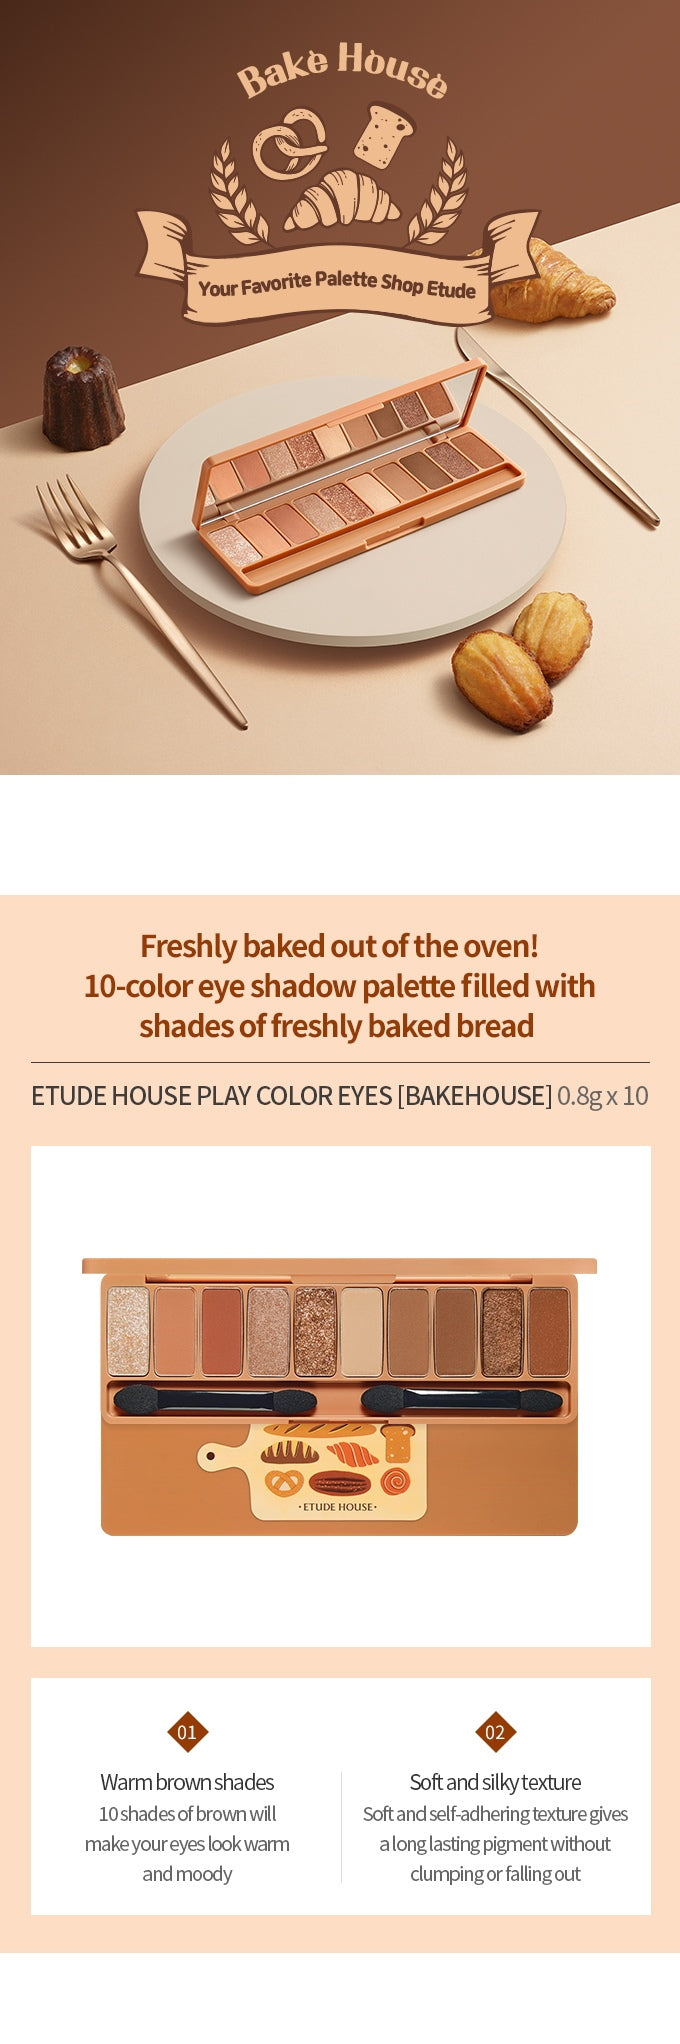 Etude House Play Color Eyes #BAKEHOUSE